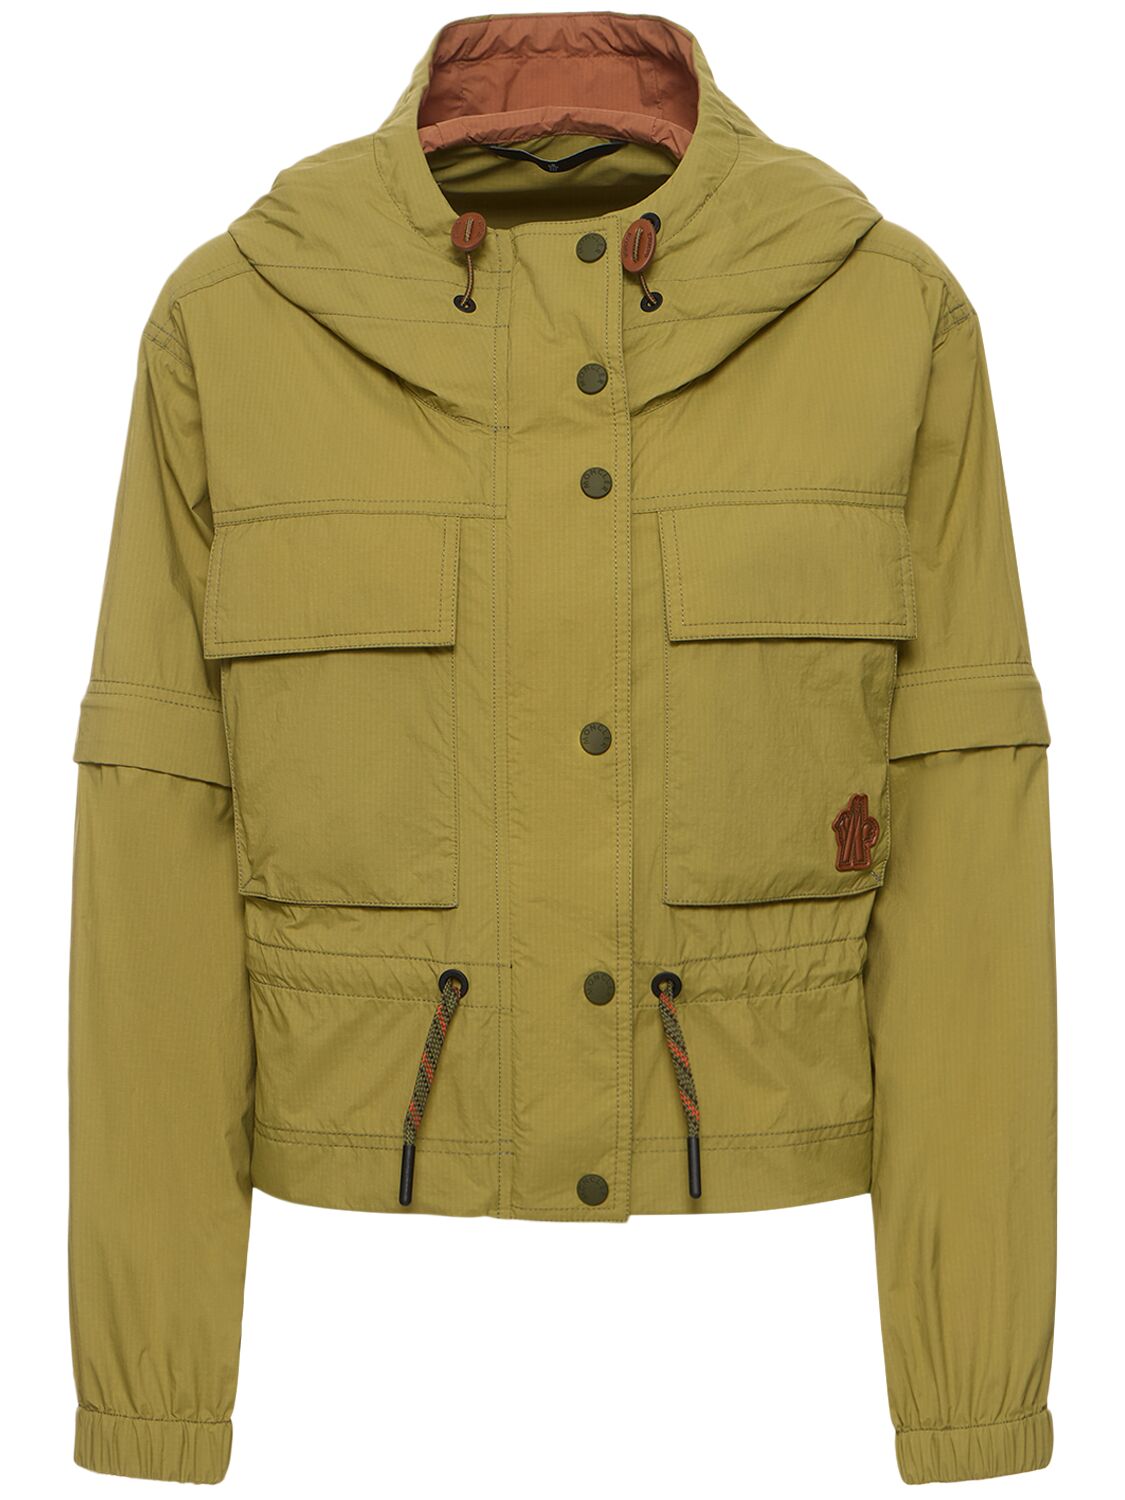 Image of Limosee Nylon Field Jacket